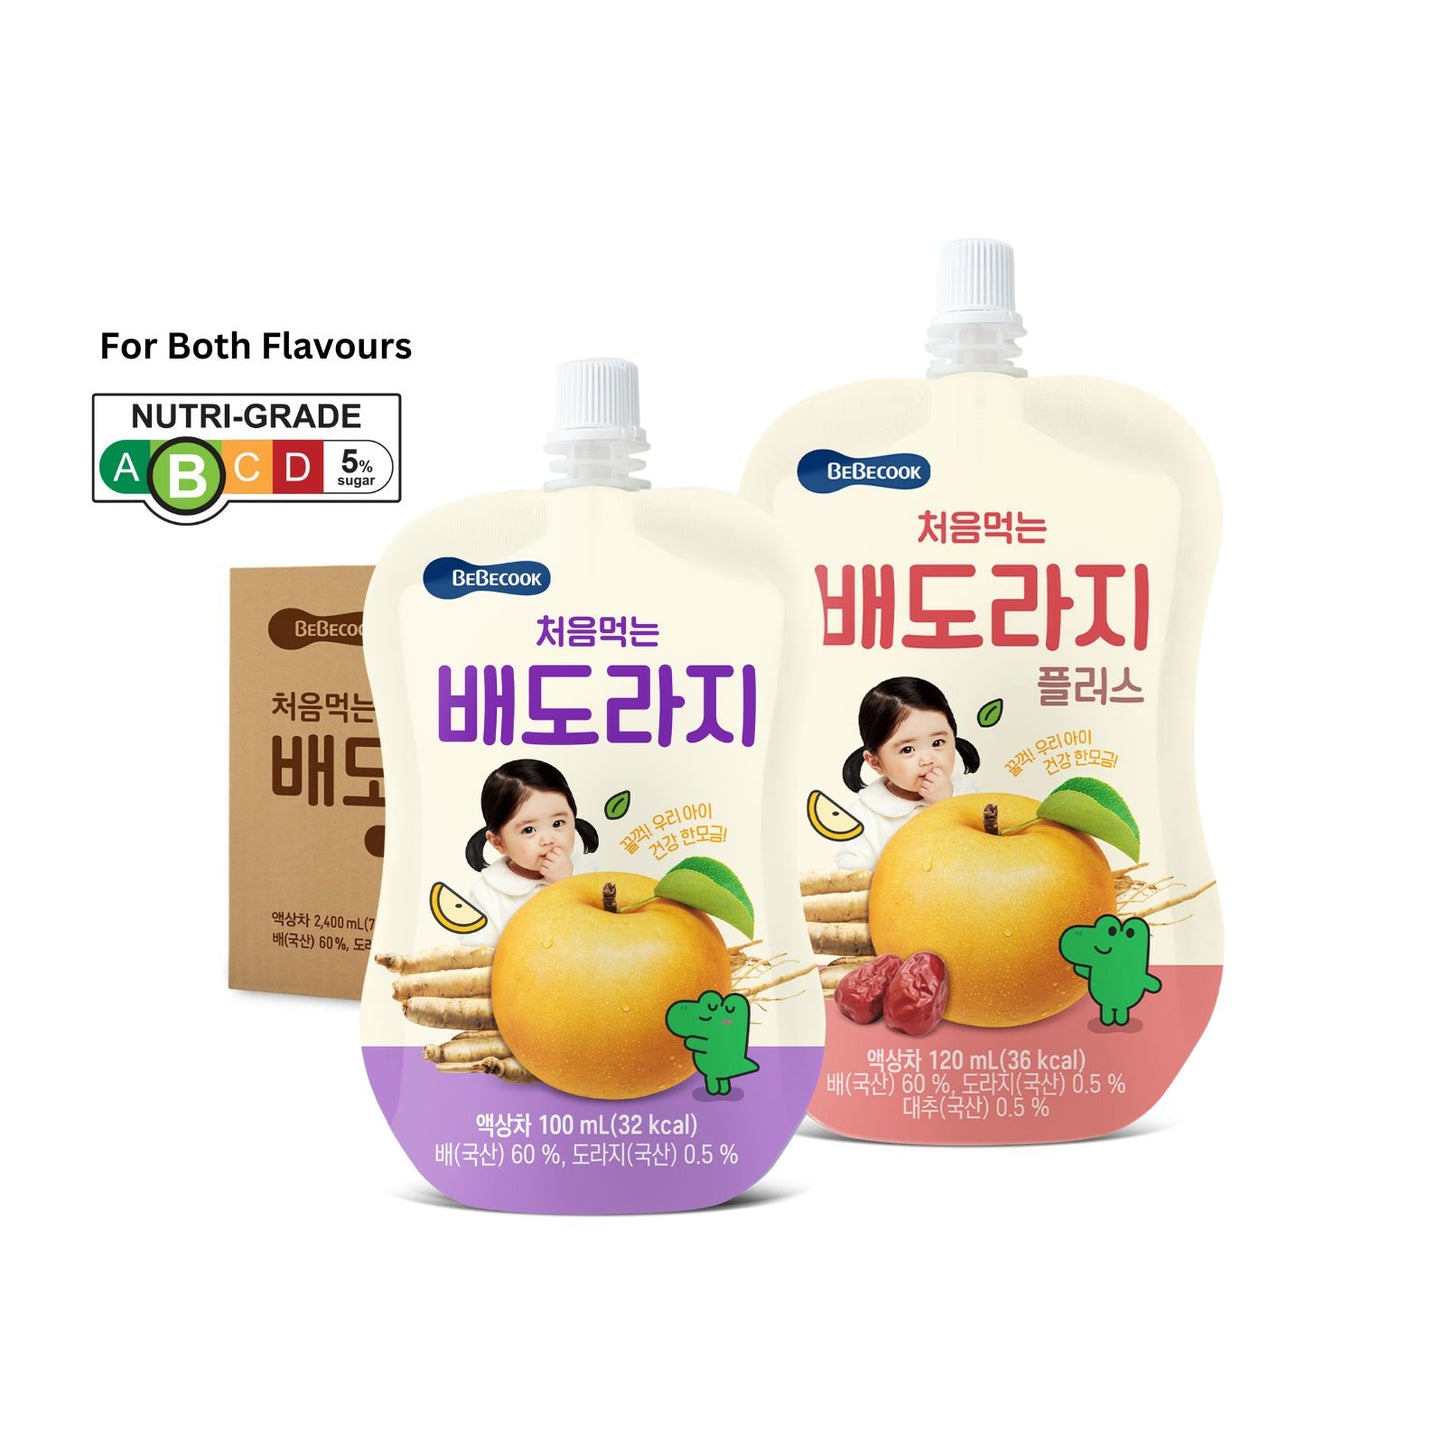 BeBecook - 20-Pk Brewed Korean Golden Pear Drink With Bellflower Root (10 X Original 10 X Jujube)